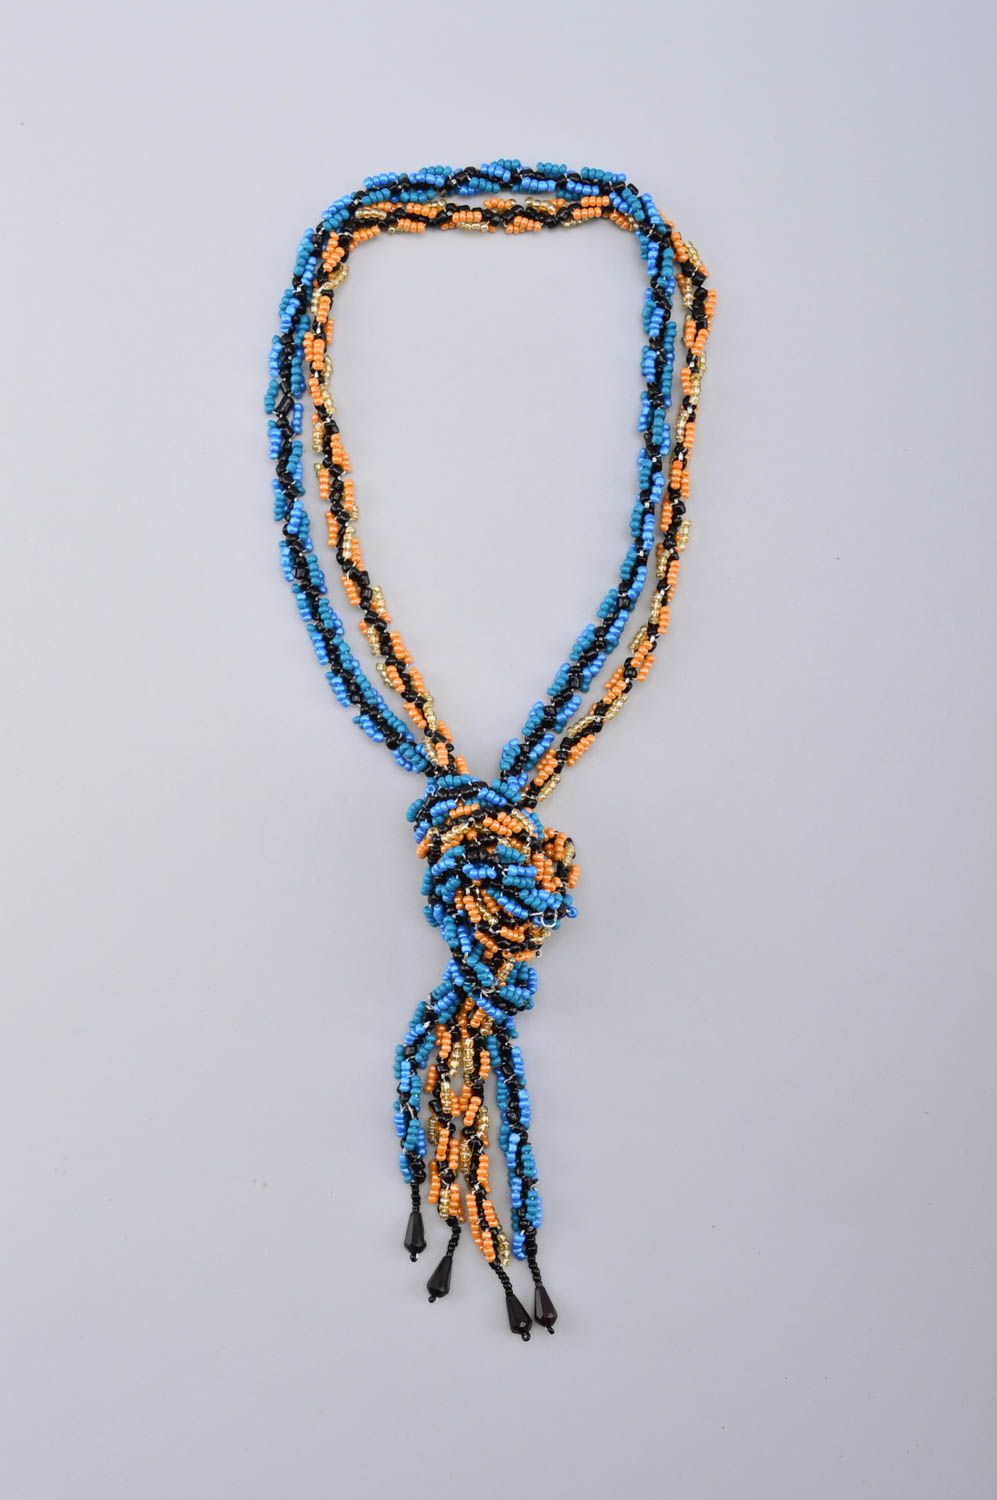 Handmade necklace bead necklace unusual neck accessory designer jewelry photo 2